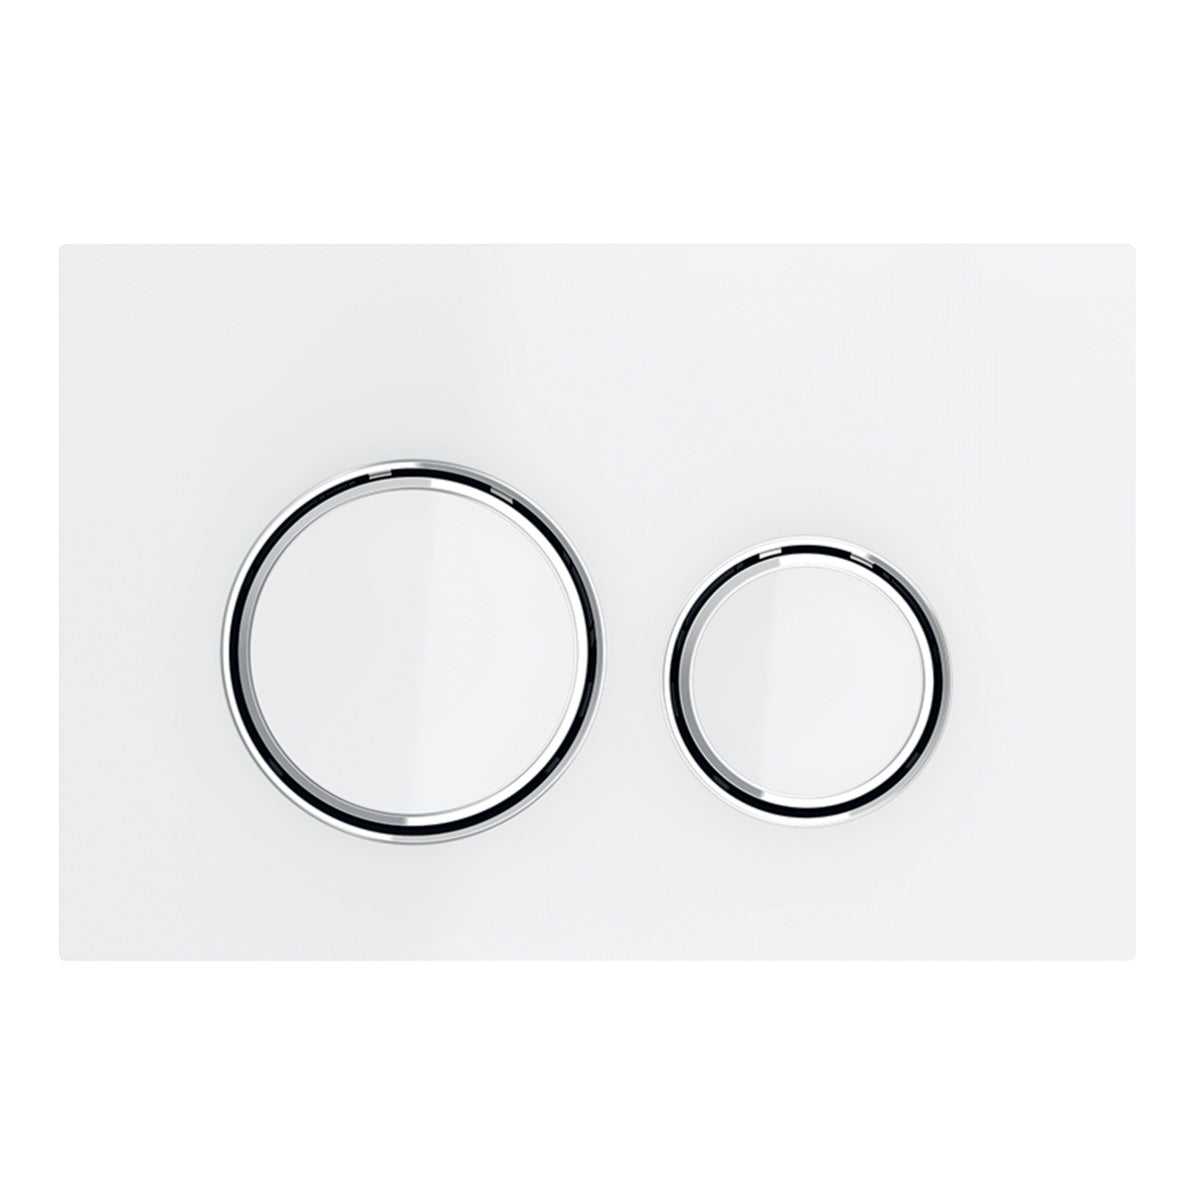 Geberit Sigma21 Dual Flush Button & Access Plate, White with Chrome Trim Design